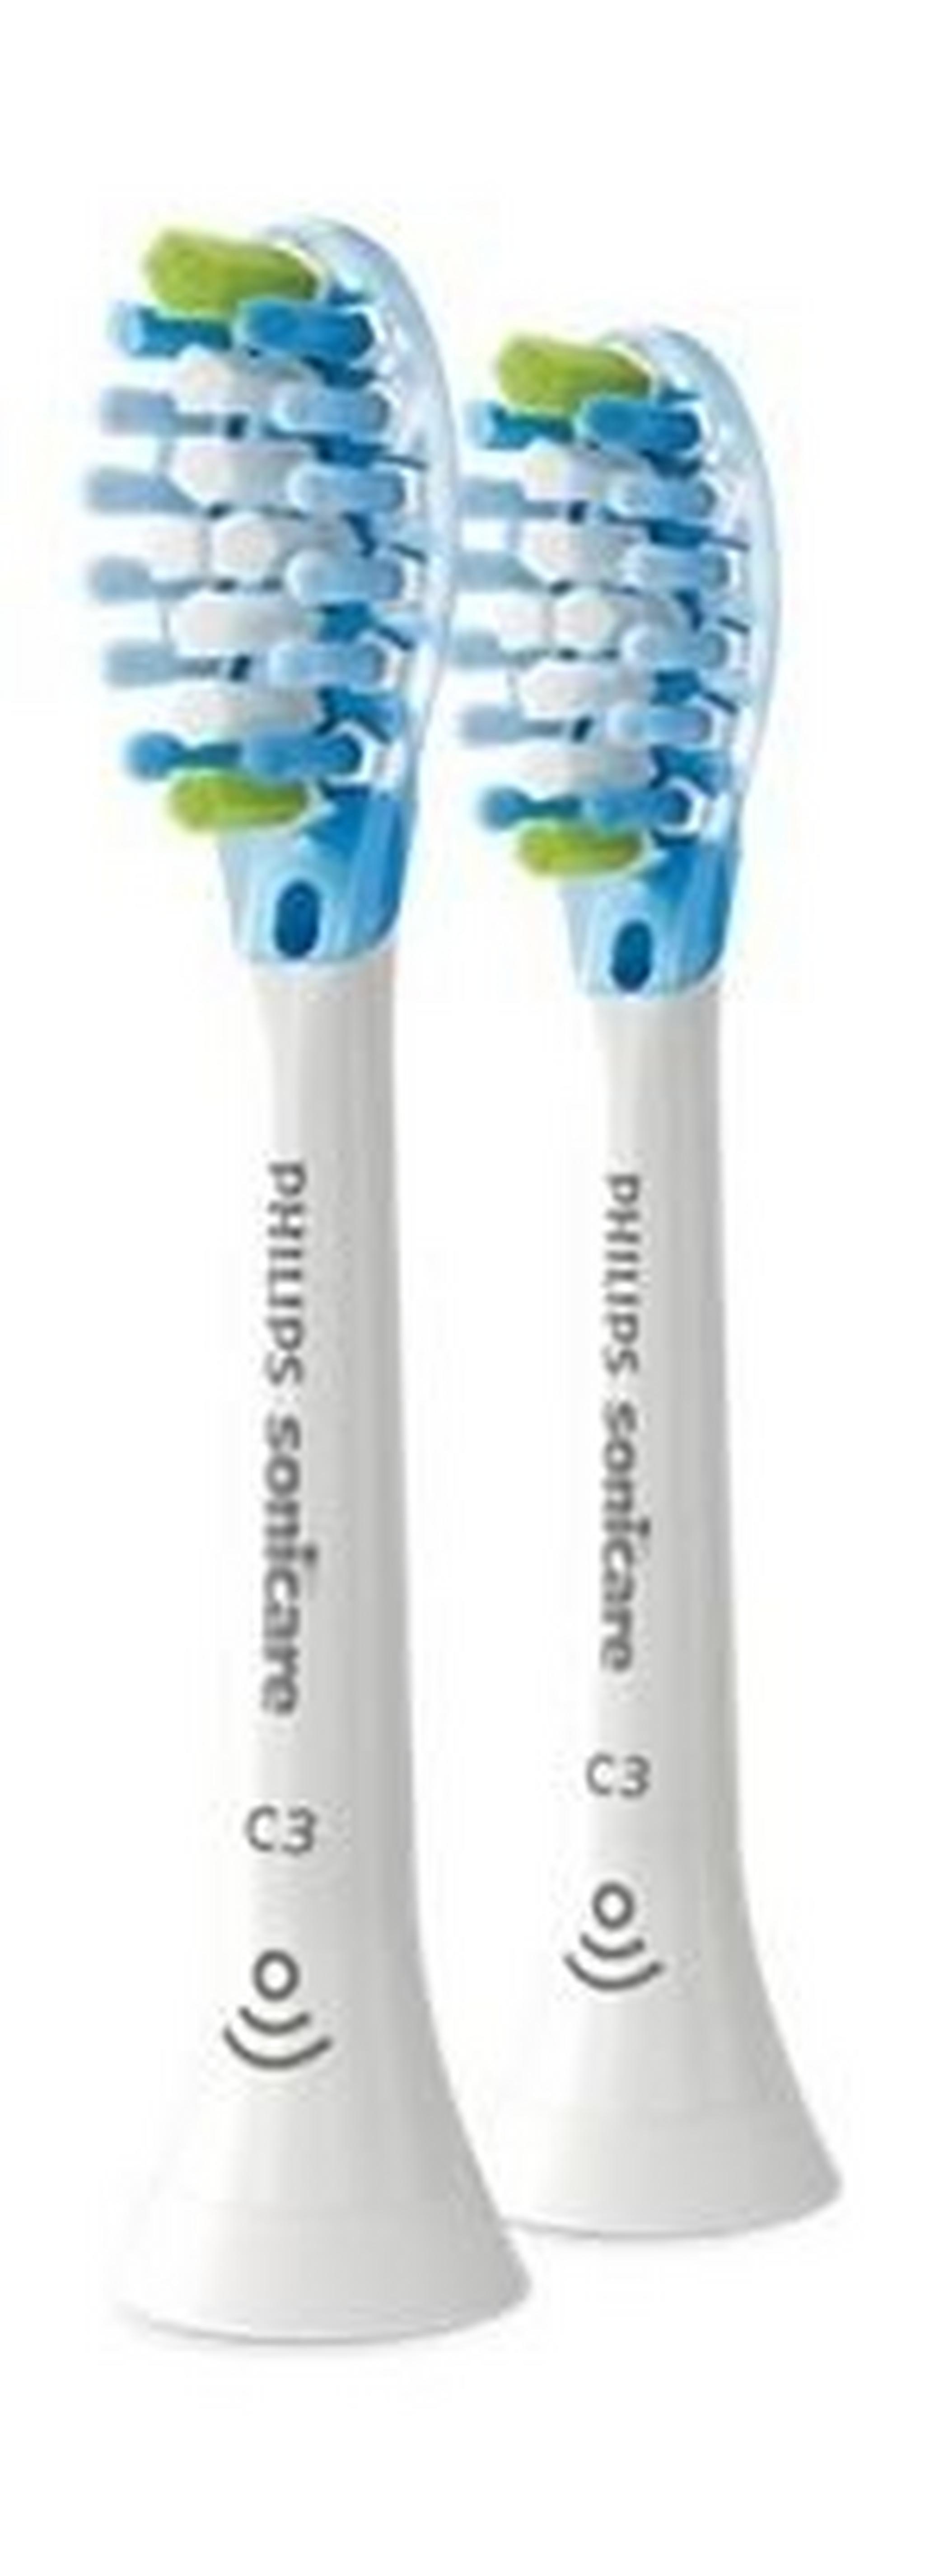 Philips Sonicare C3 Premium Plaque Defence Standard sonic toothbrush heads - HX9042/17